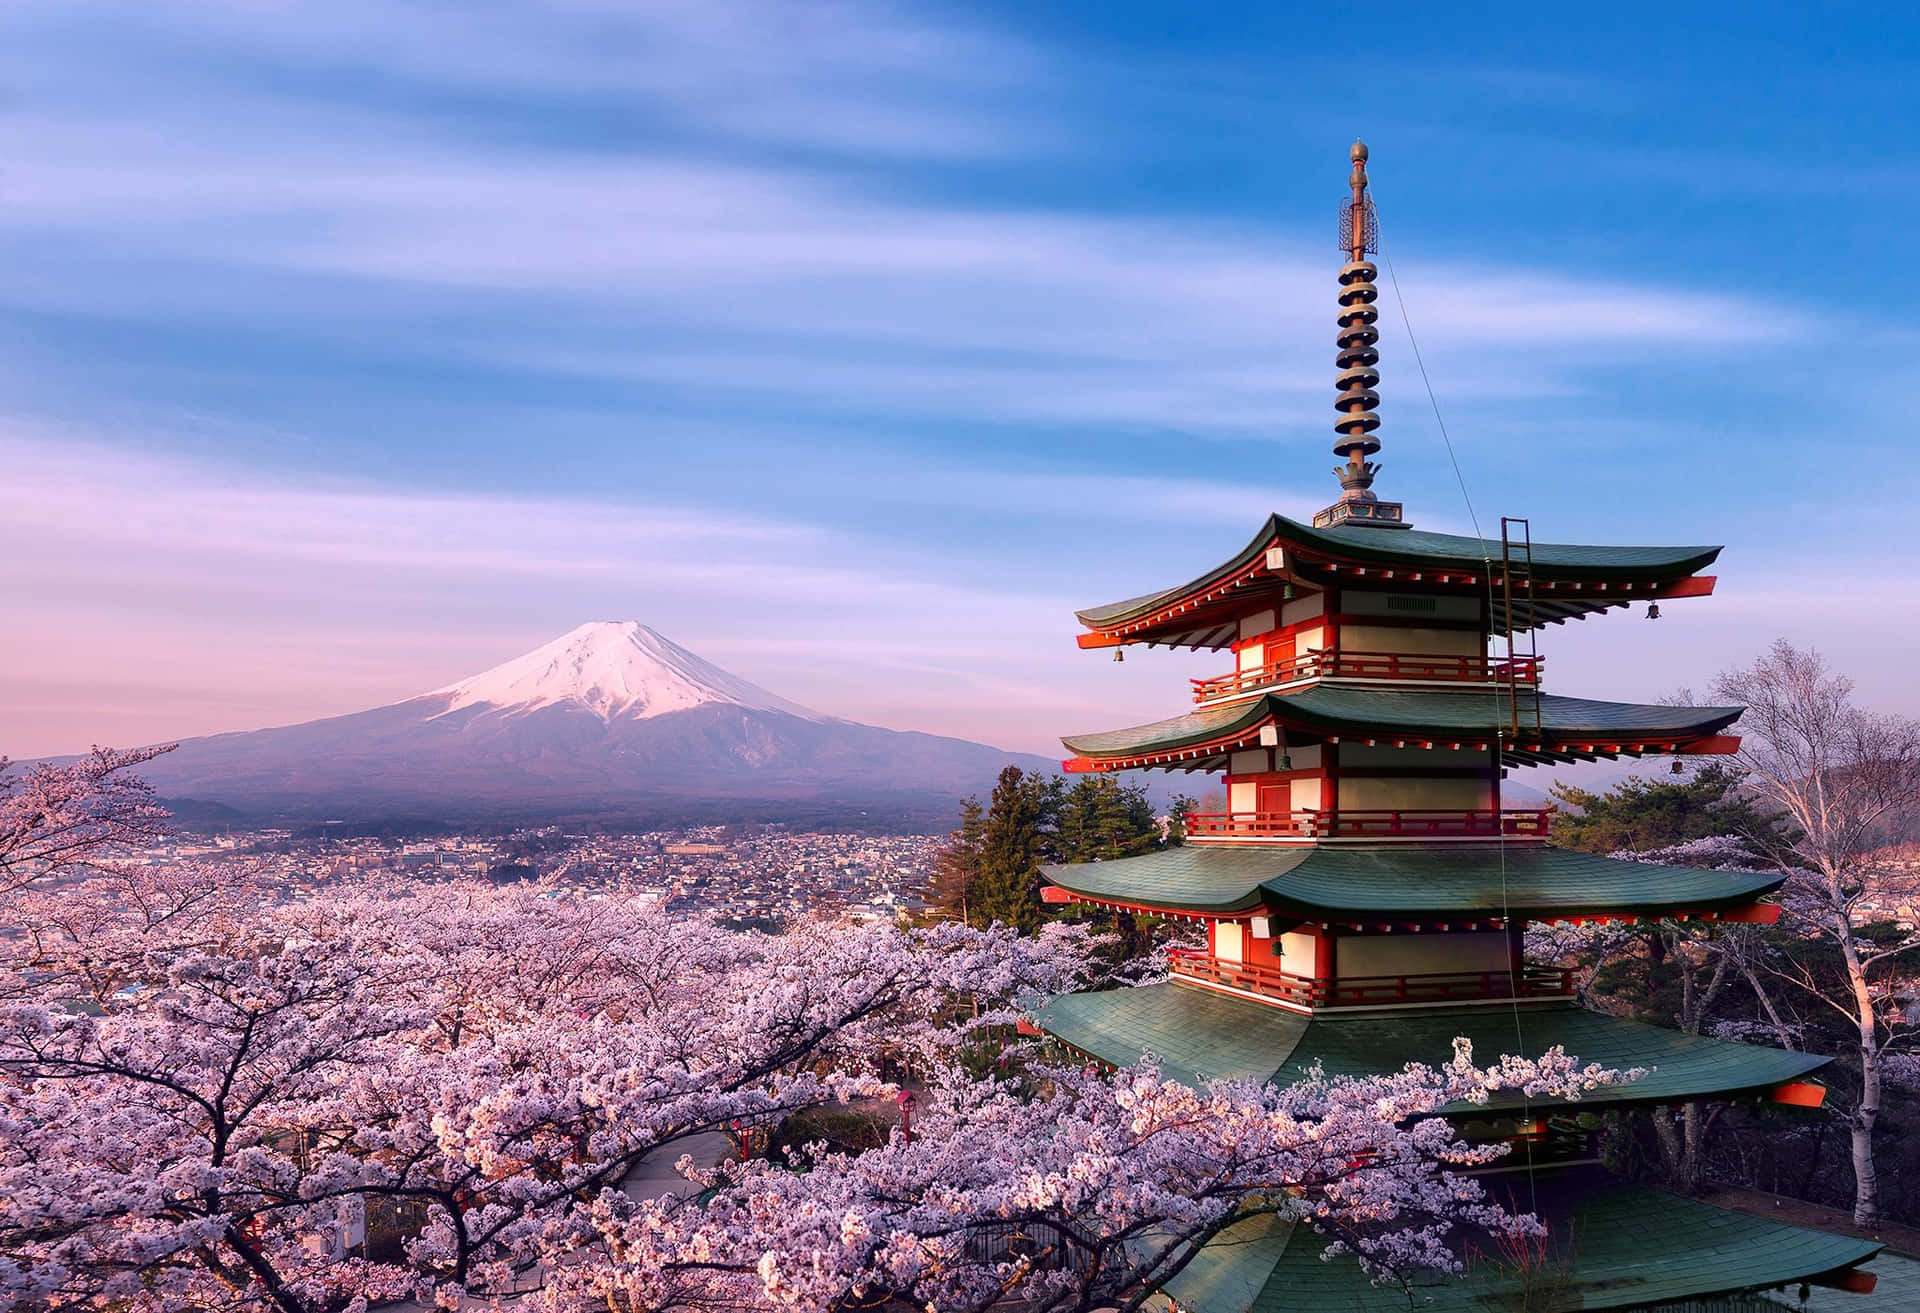 Find Your Zen on a Serene Japanese Desktop Wallpaper